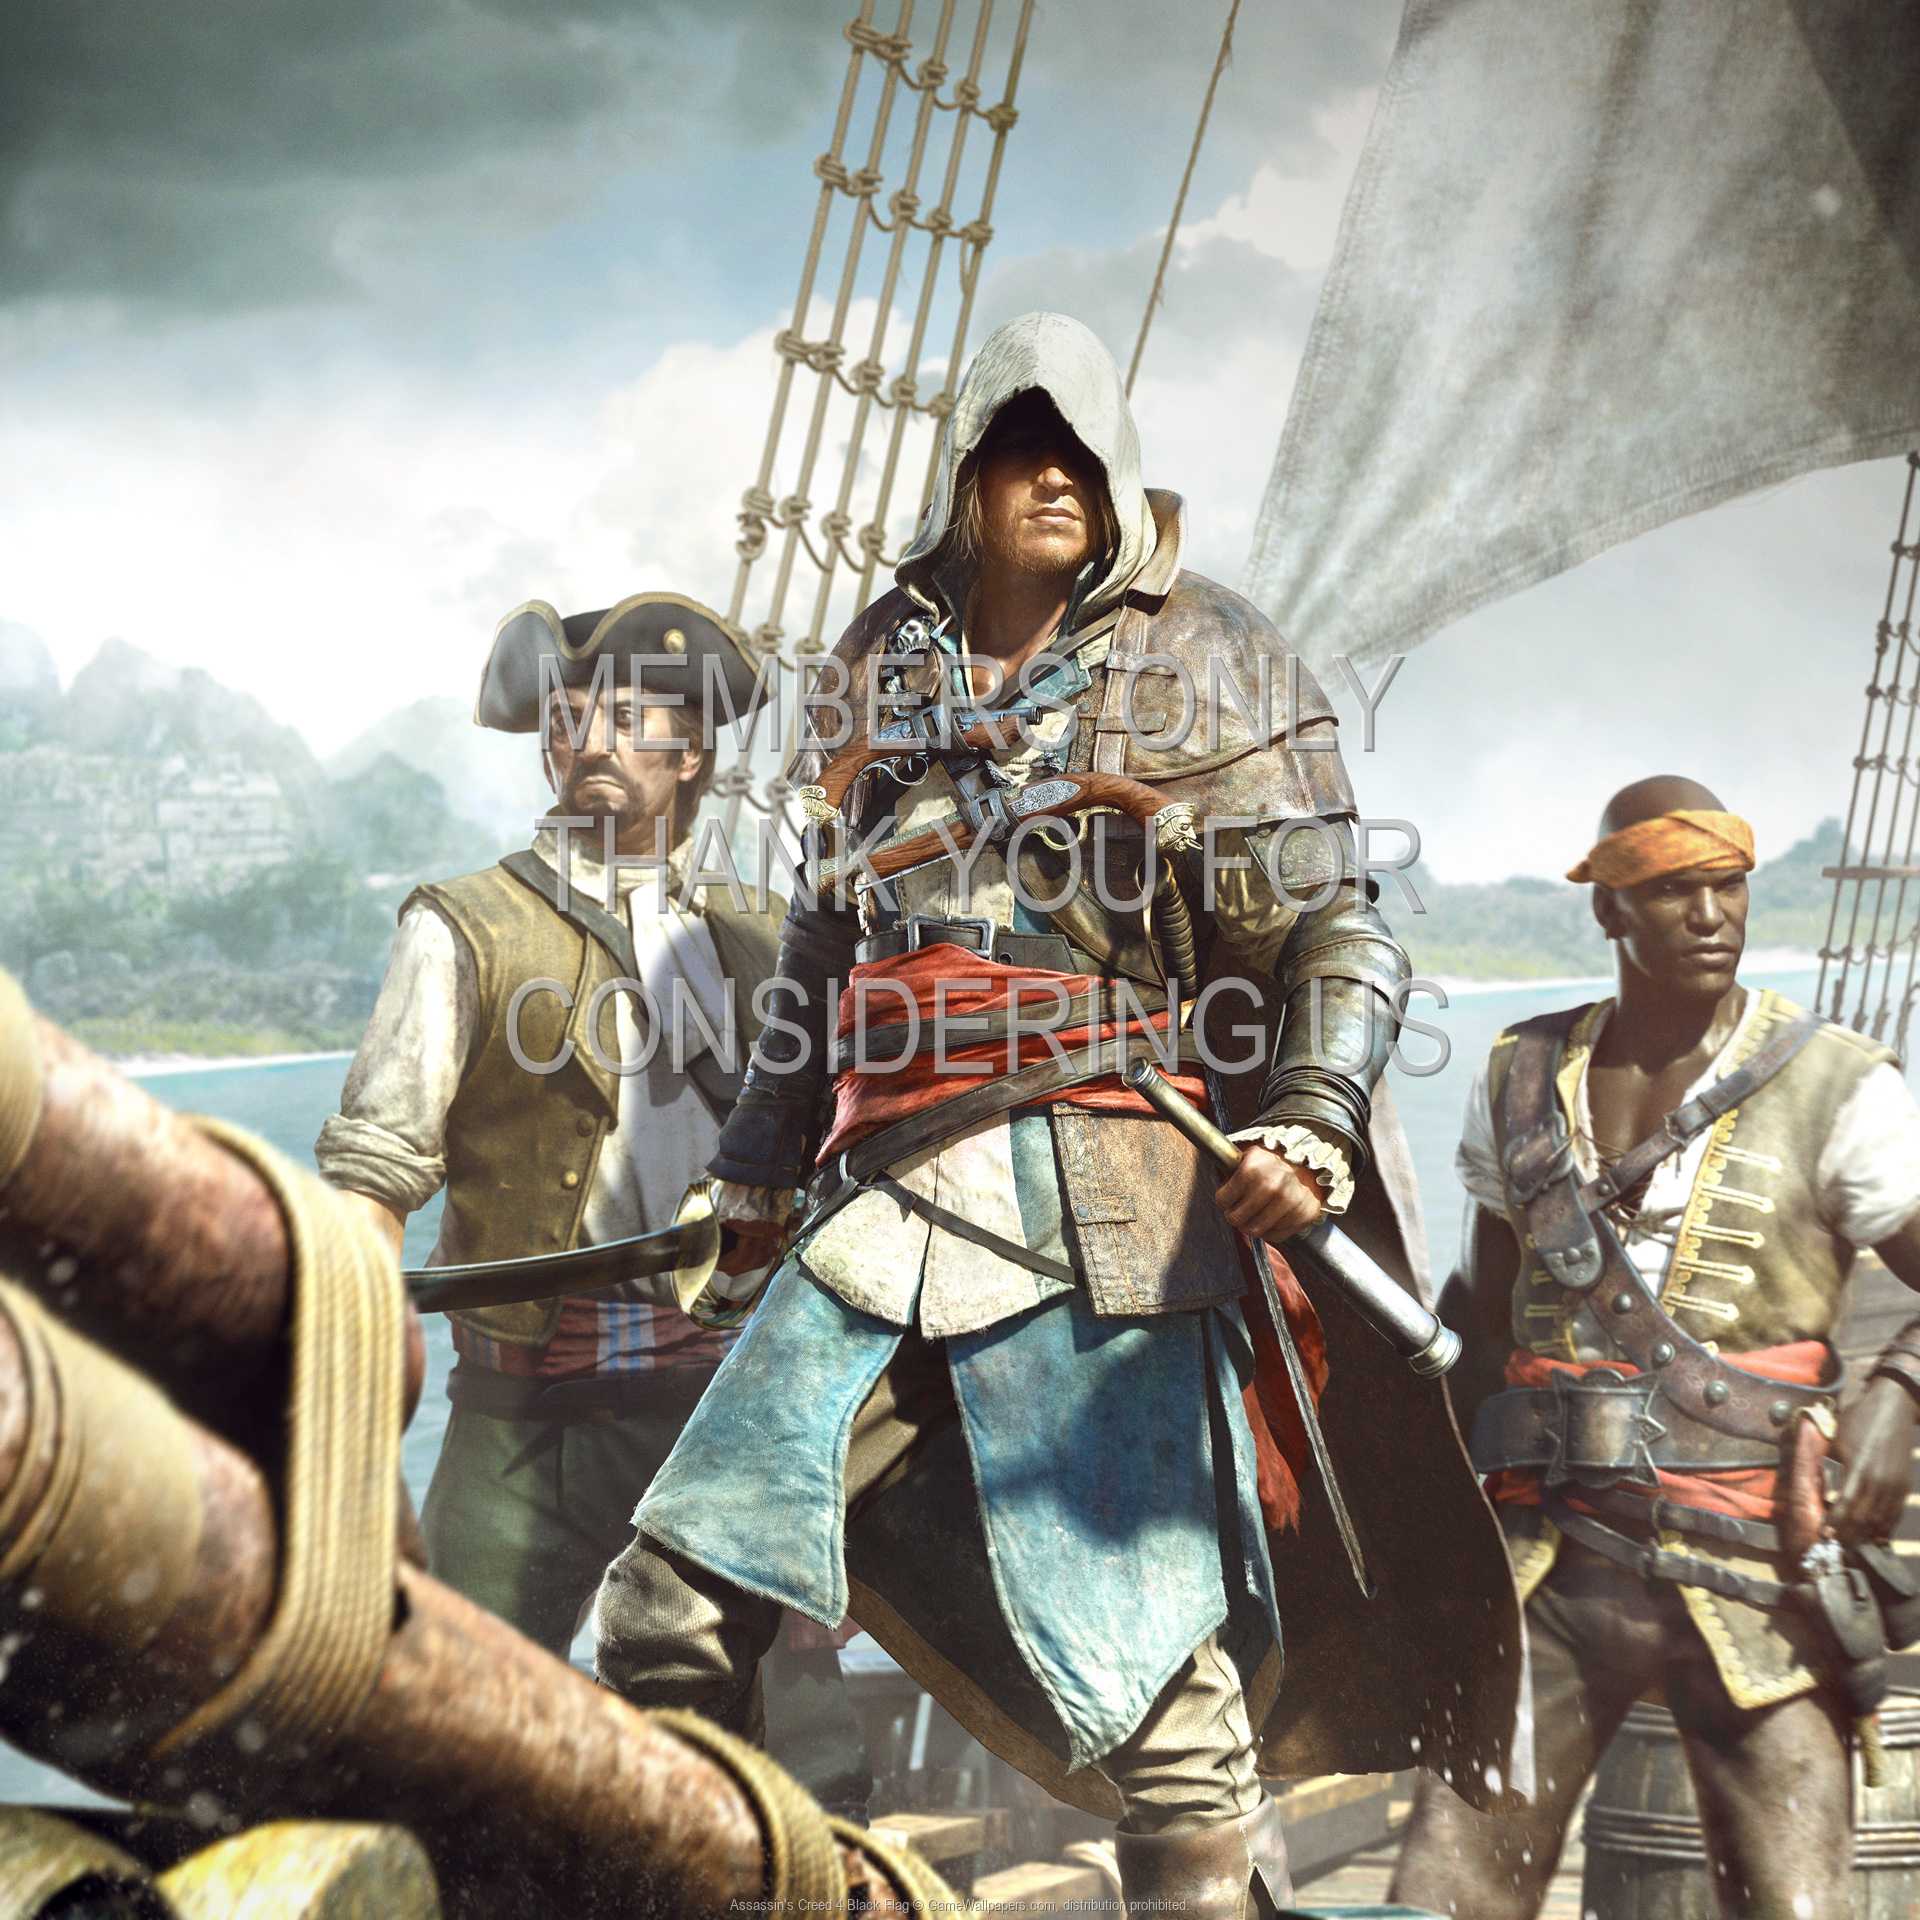 Assassin's Creed 4: Black Flag 1080p Horizontal Mobile wallpaper or background 18